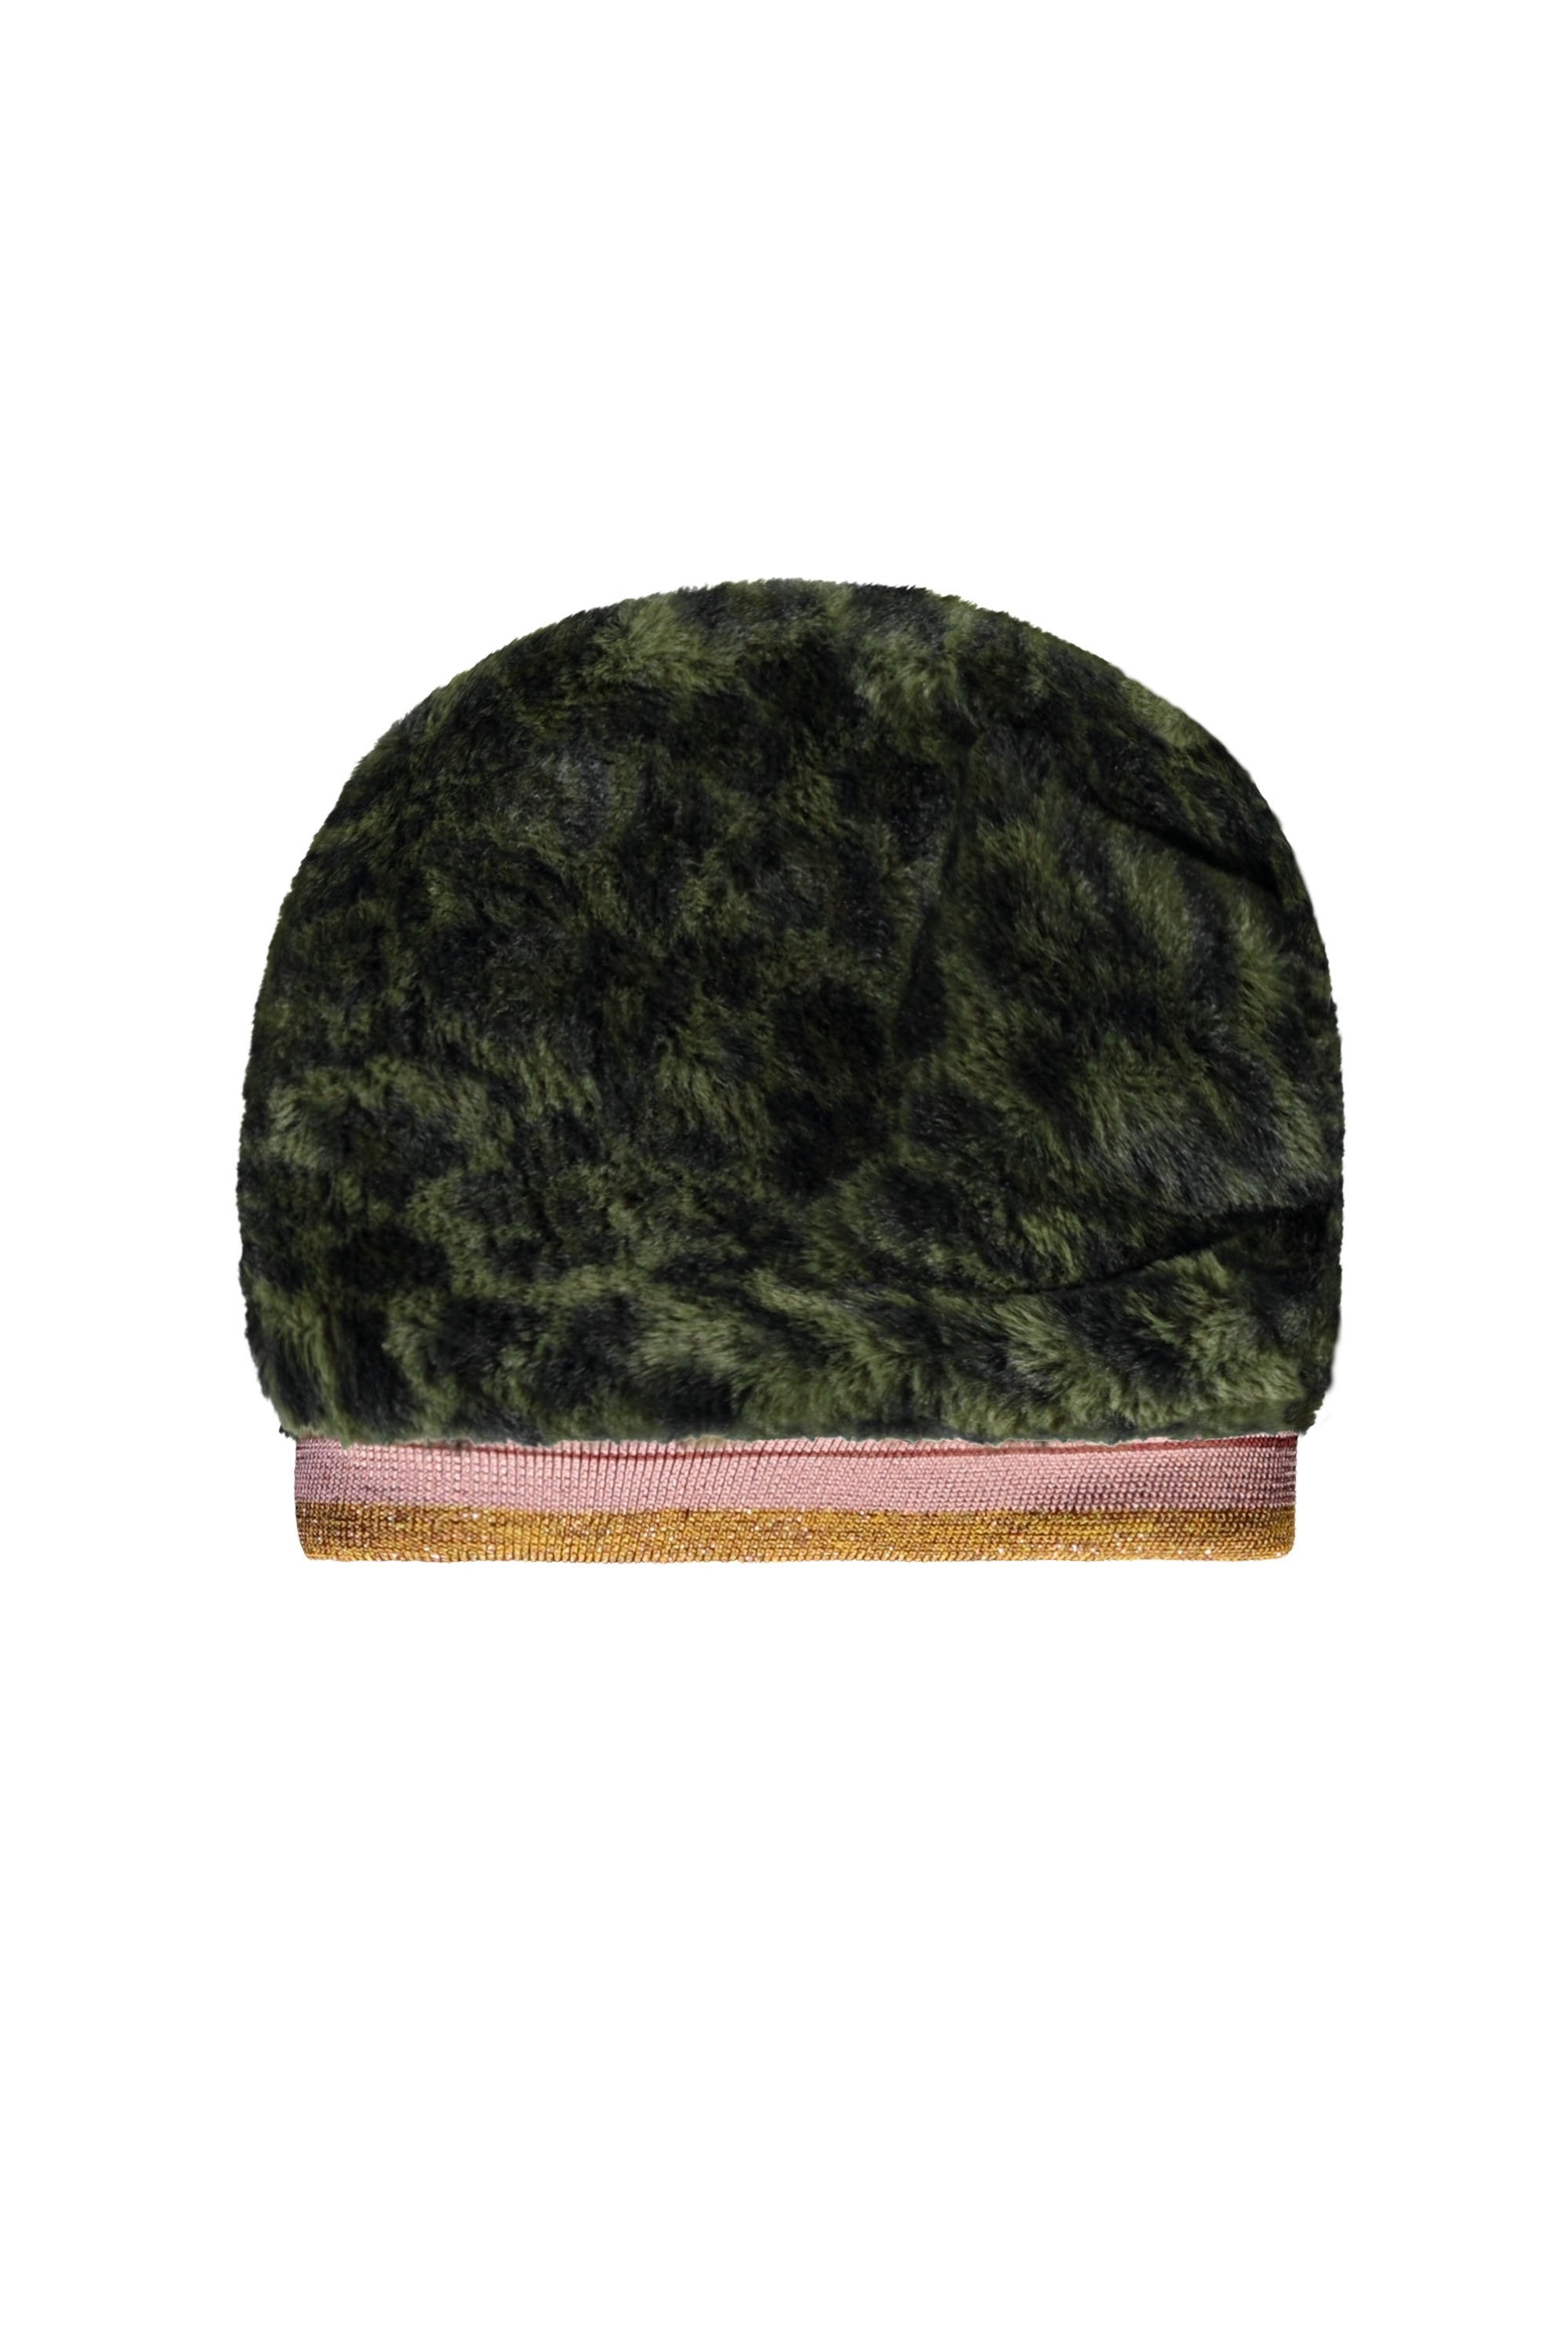 Meisjes Flo girls fur hat with rib van Like Flo in de kleur Army in maat S2.